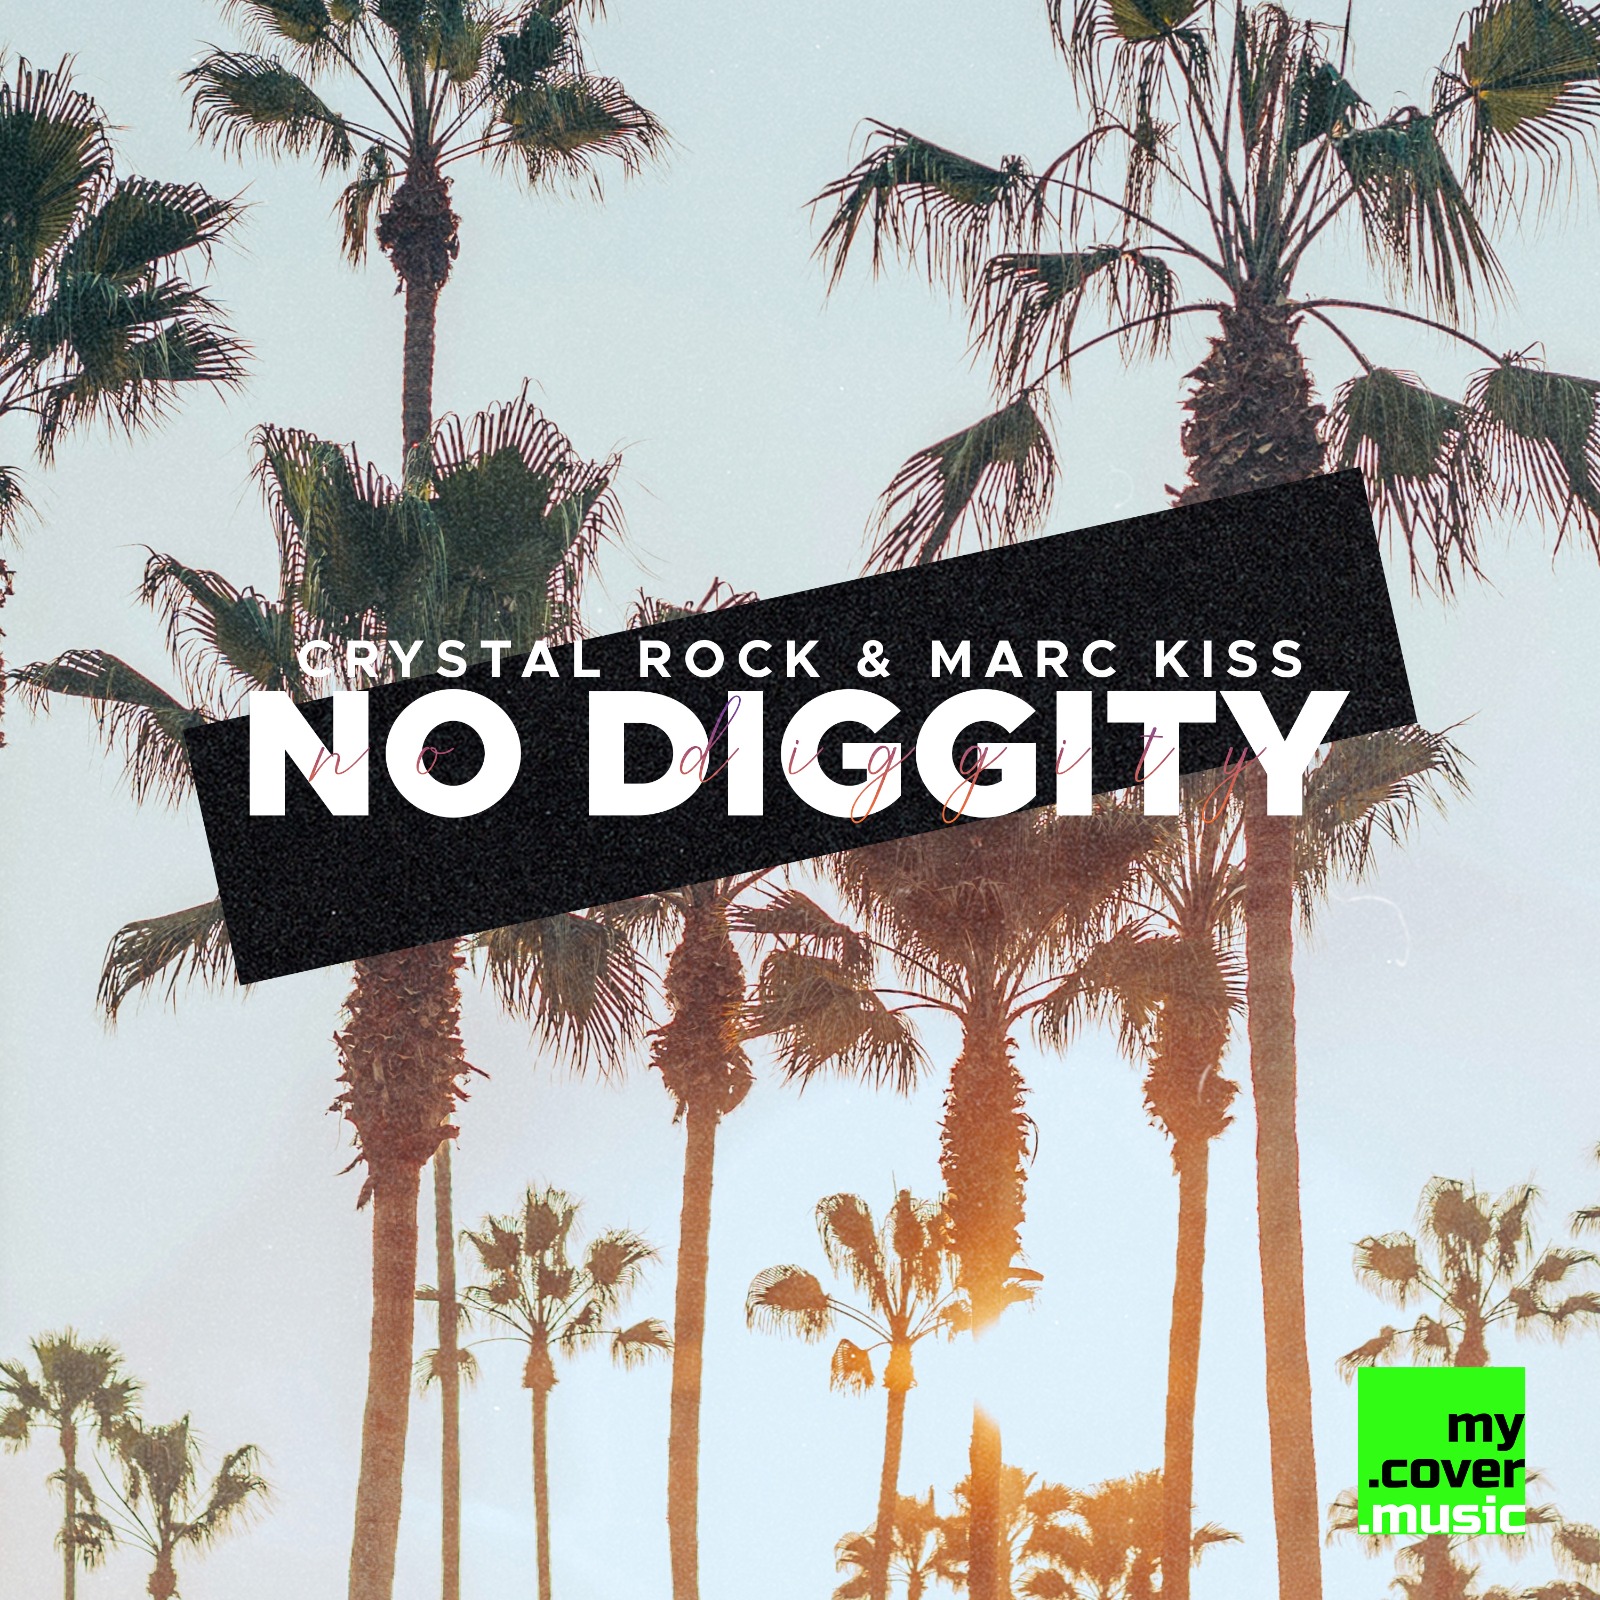 Crystal Rock & Marc Kiss - No Digitty